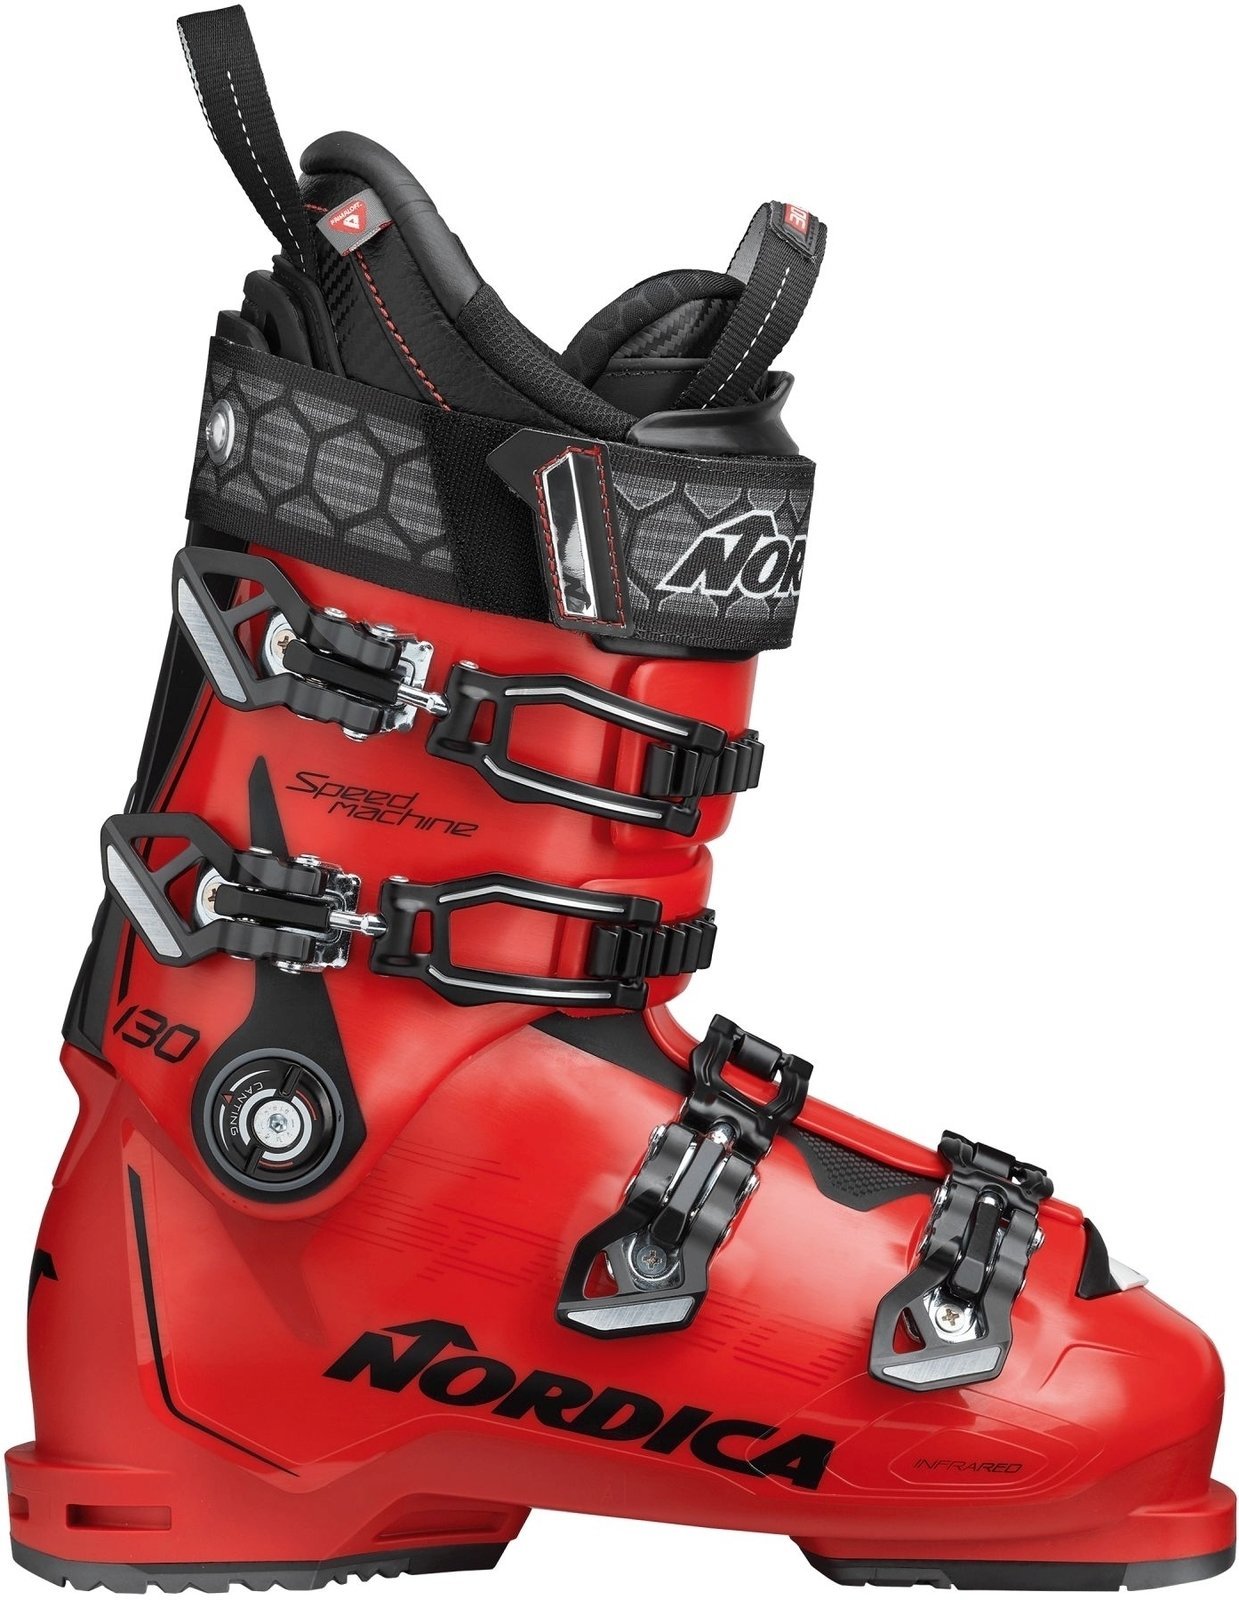 Chaussures de ski alpin Nordica Speedmachine Rouge-Noir 275 Chaussures de ski alpin